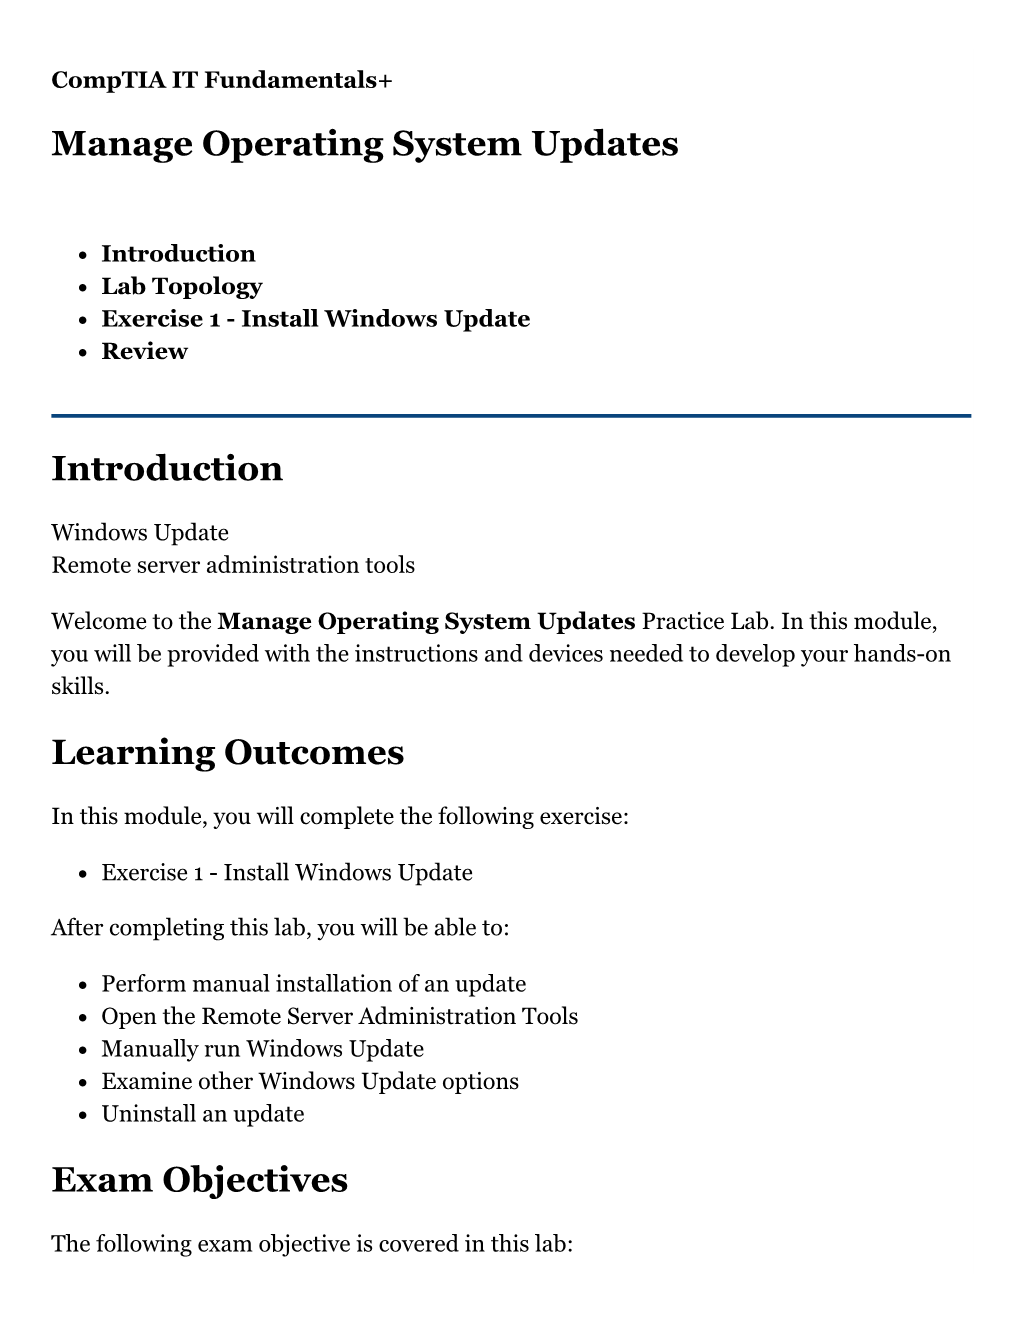 Manage Operating System Updates